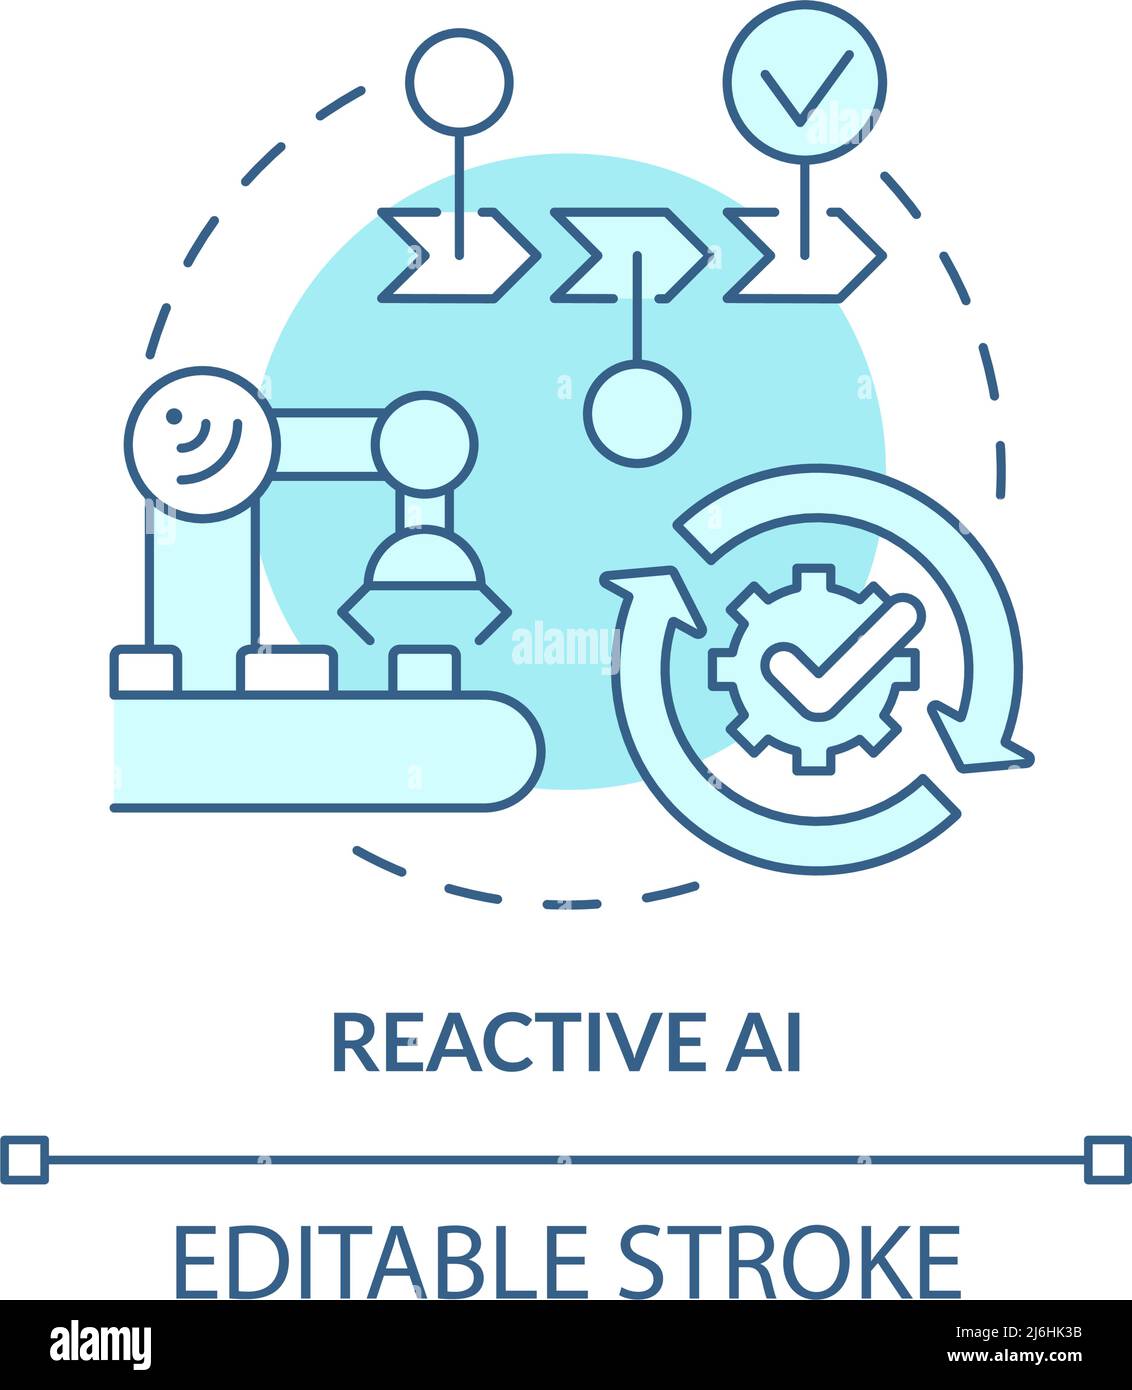 Reactive AI turquoise concept icon Stock Vector